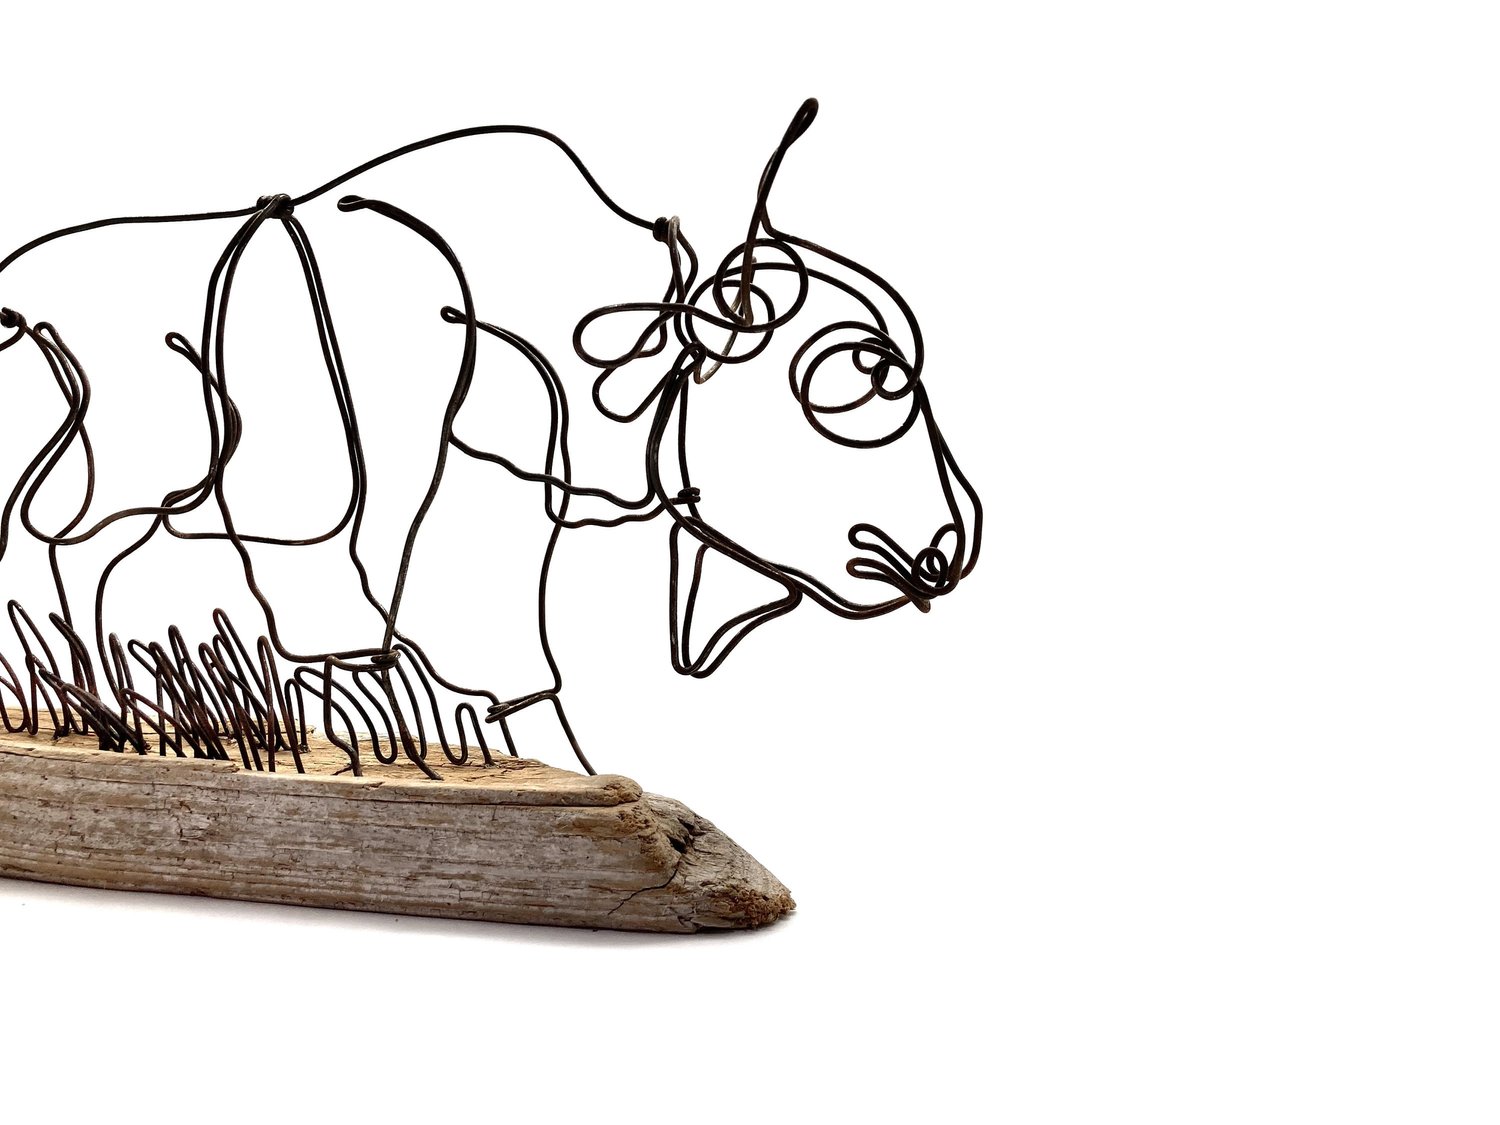 Buffalo Sculpture, Wire Art, Bison Art, One Continuous Line